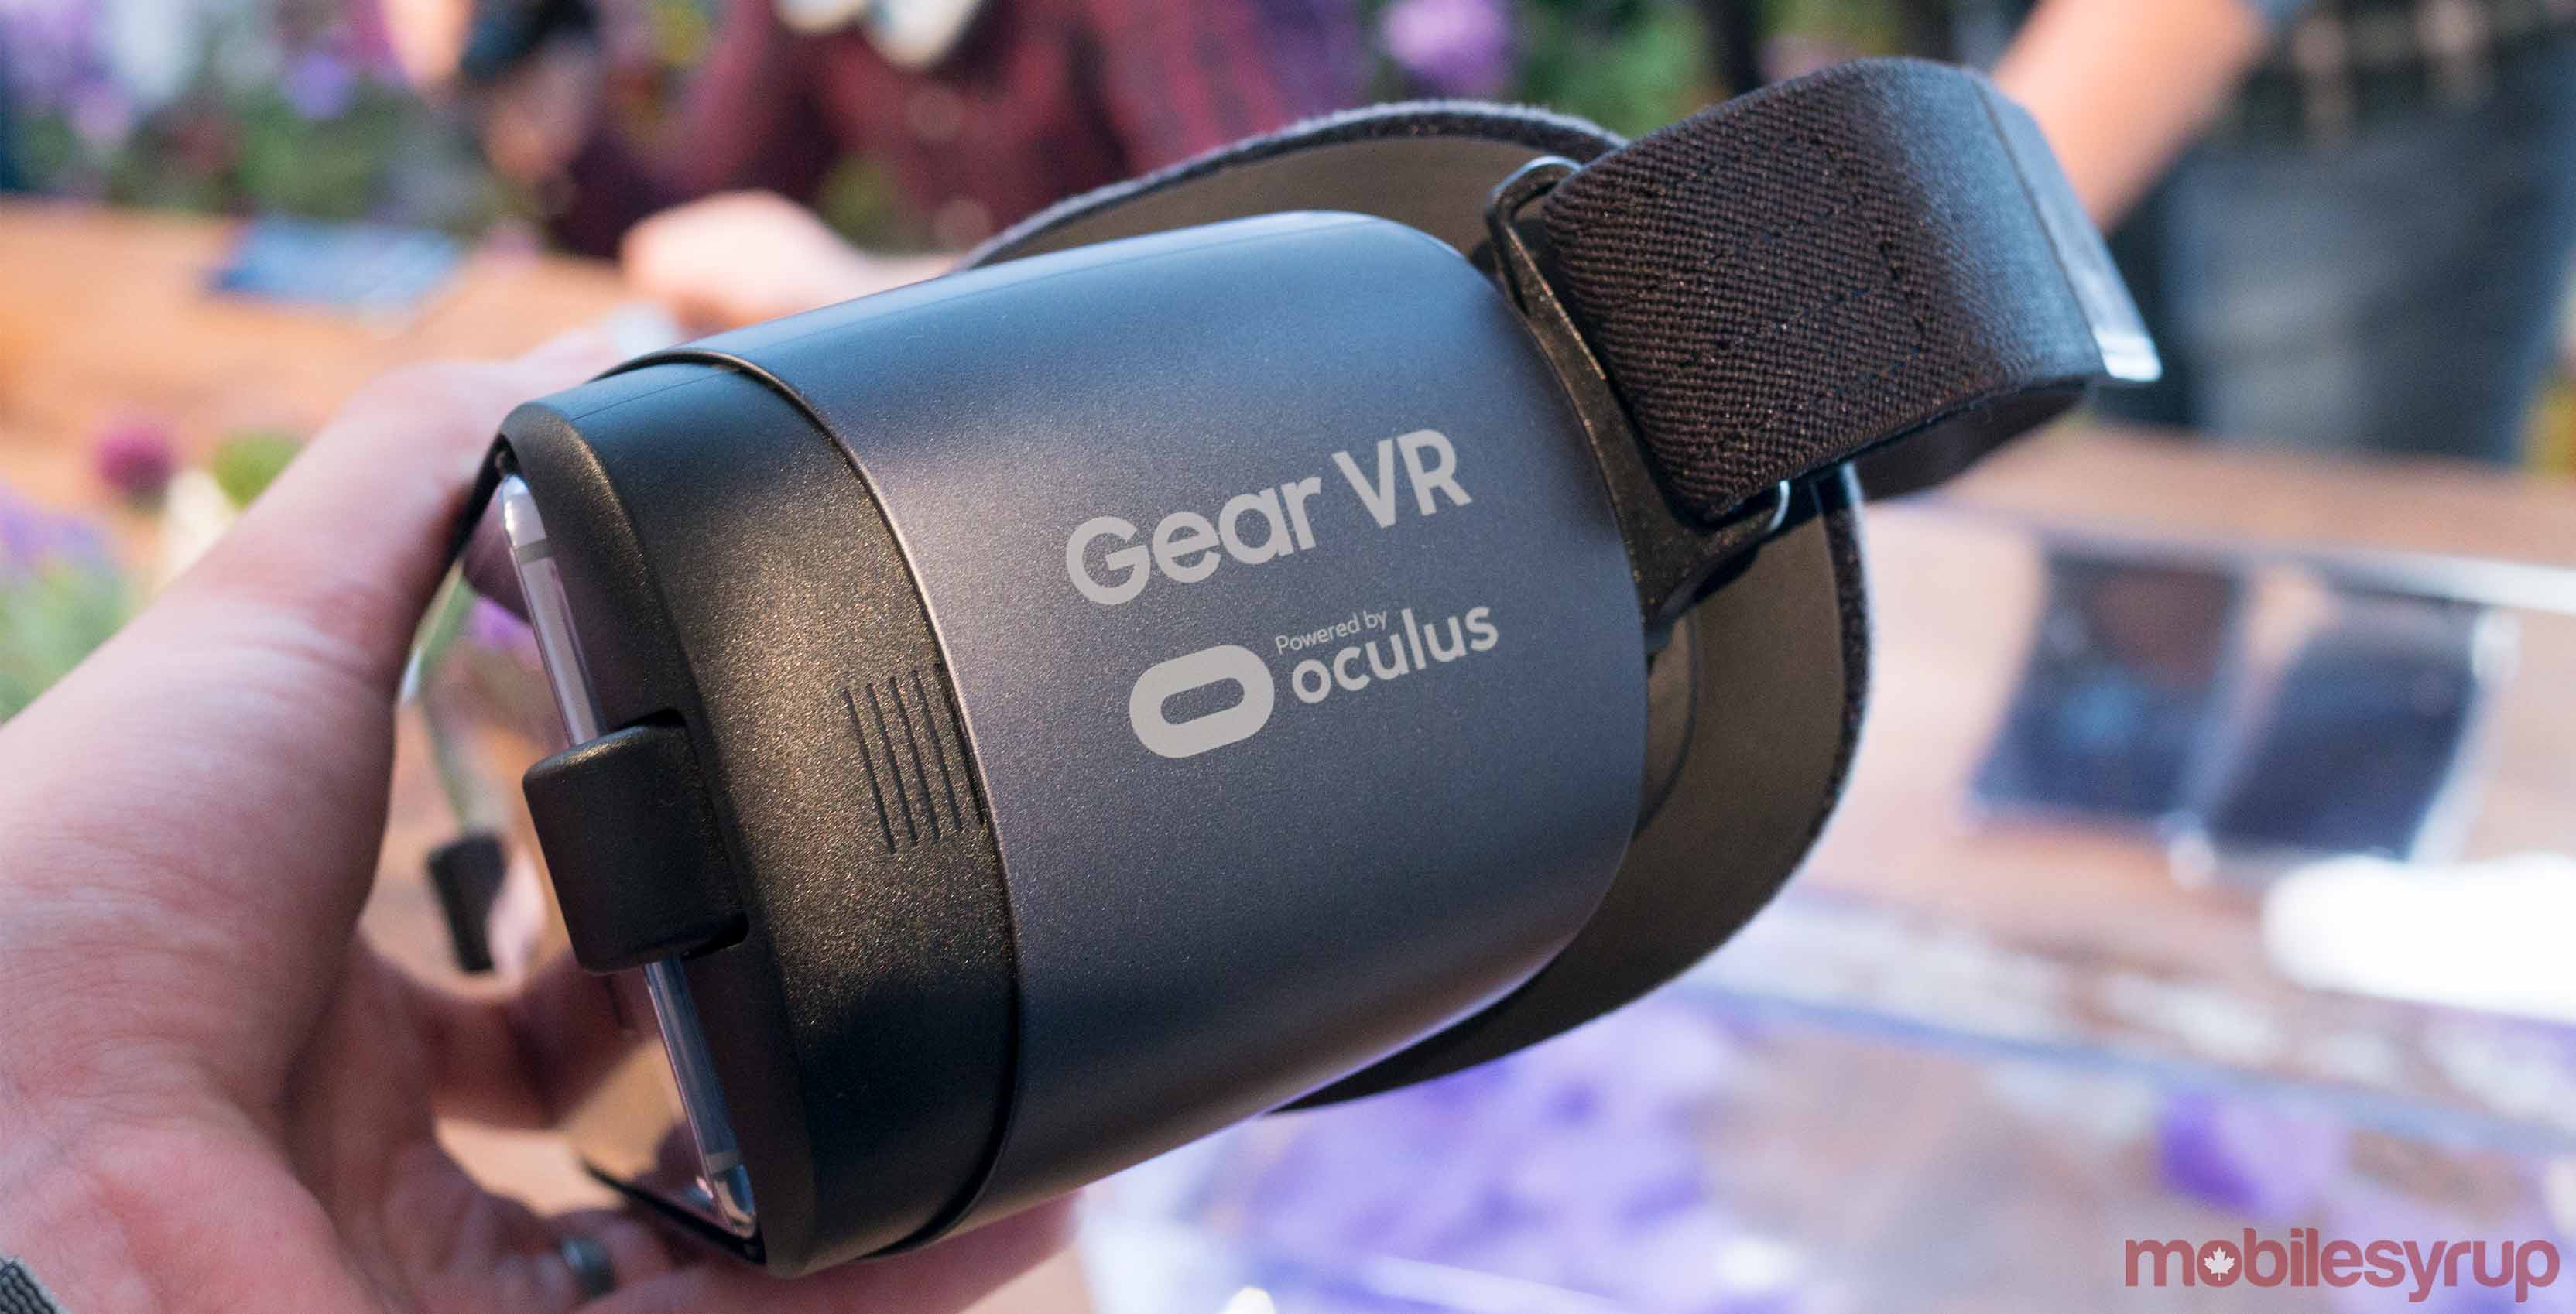 Gear VR side view